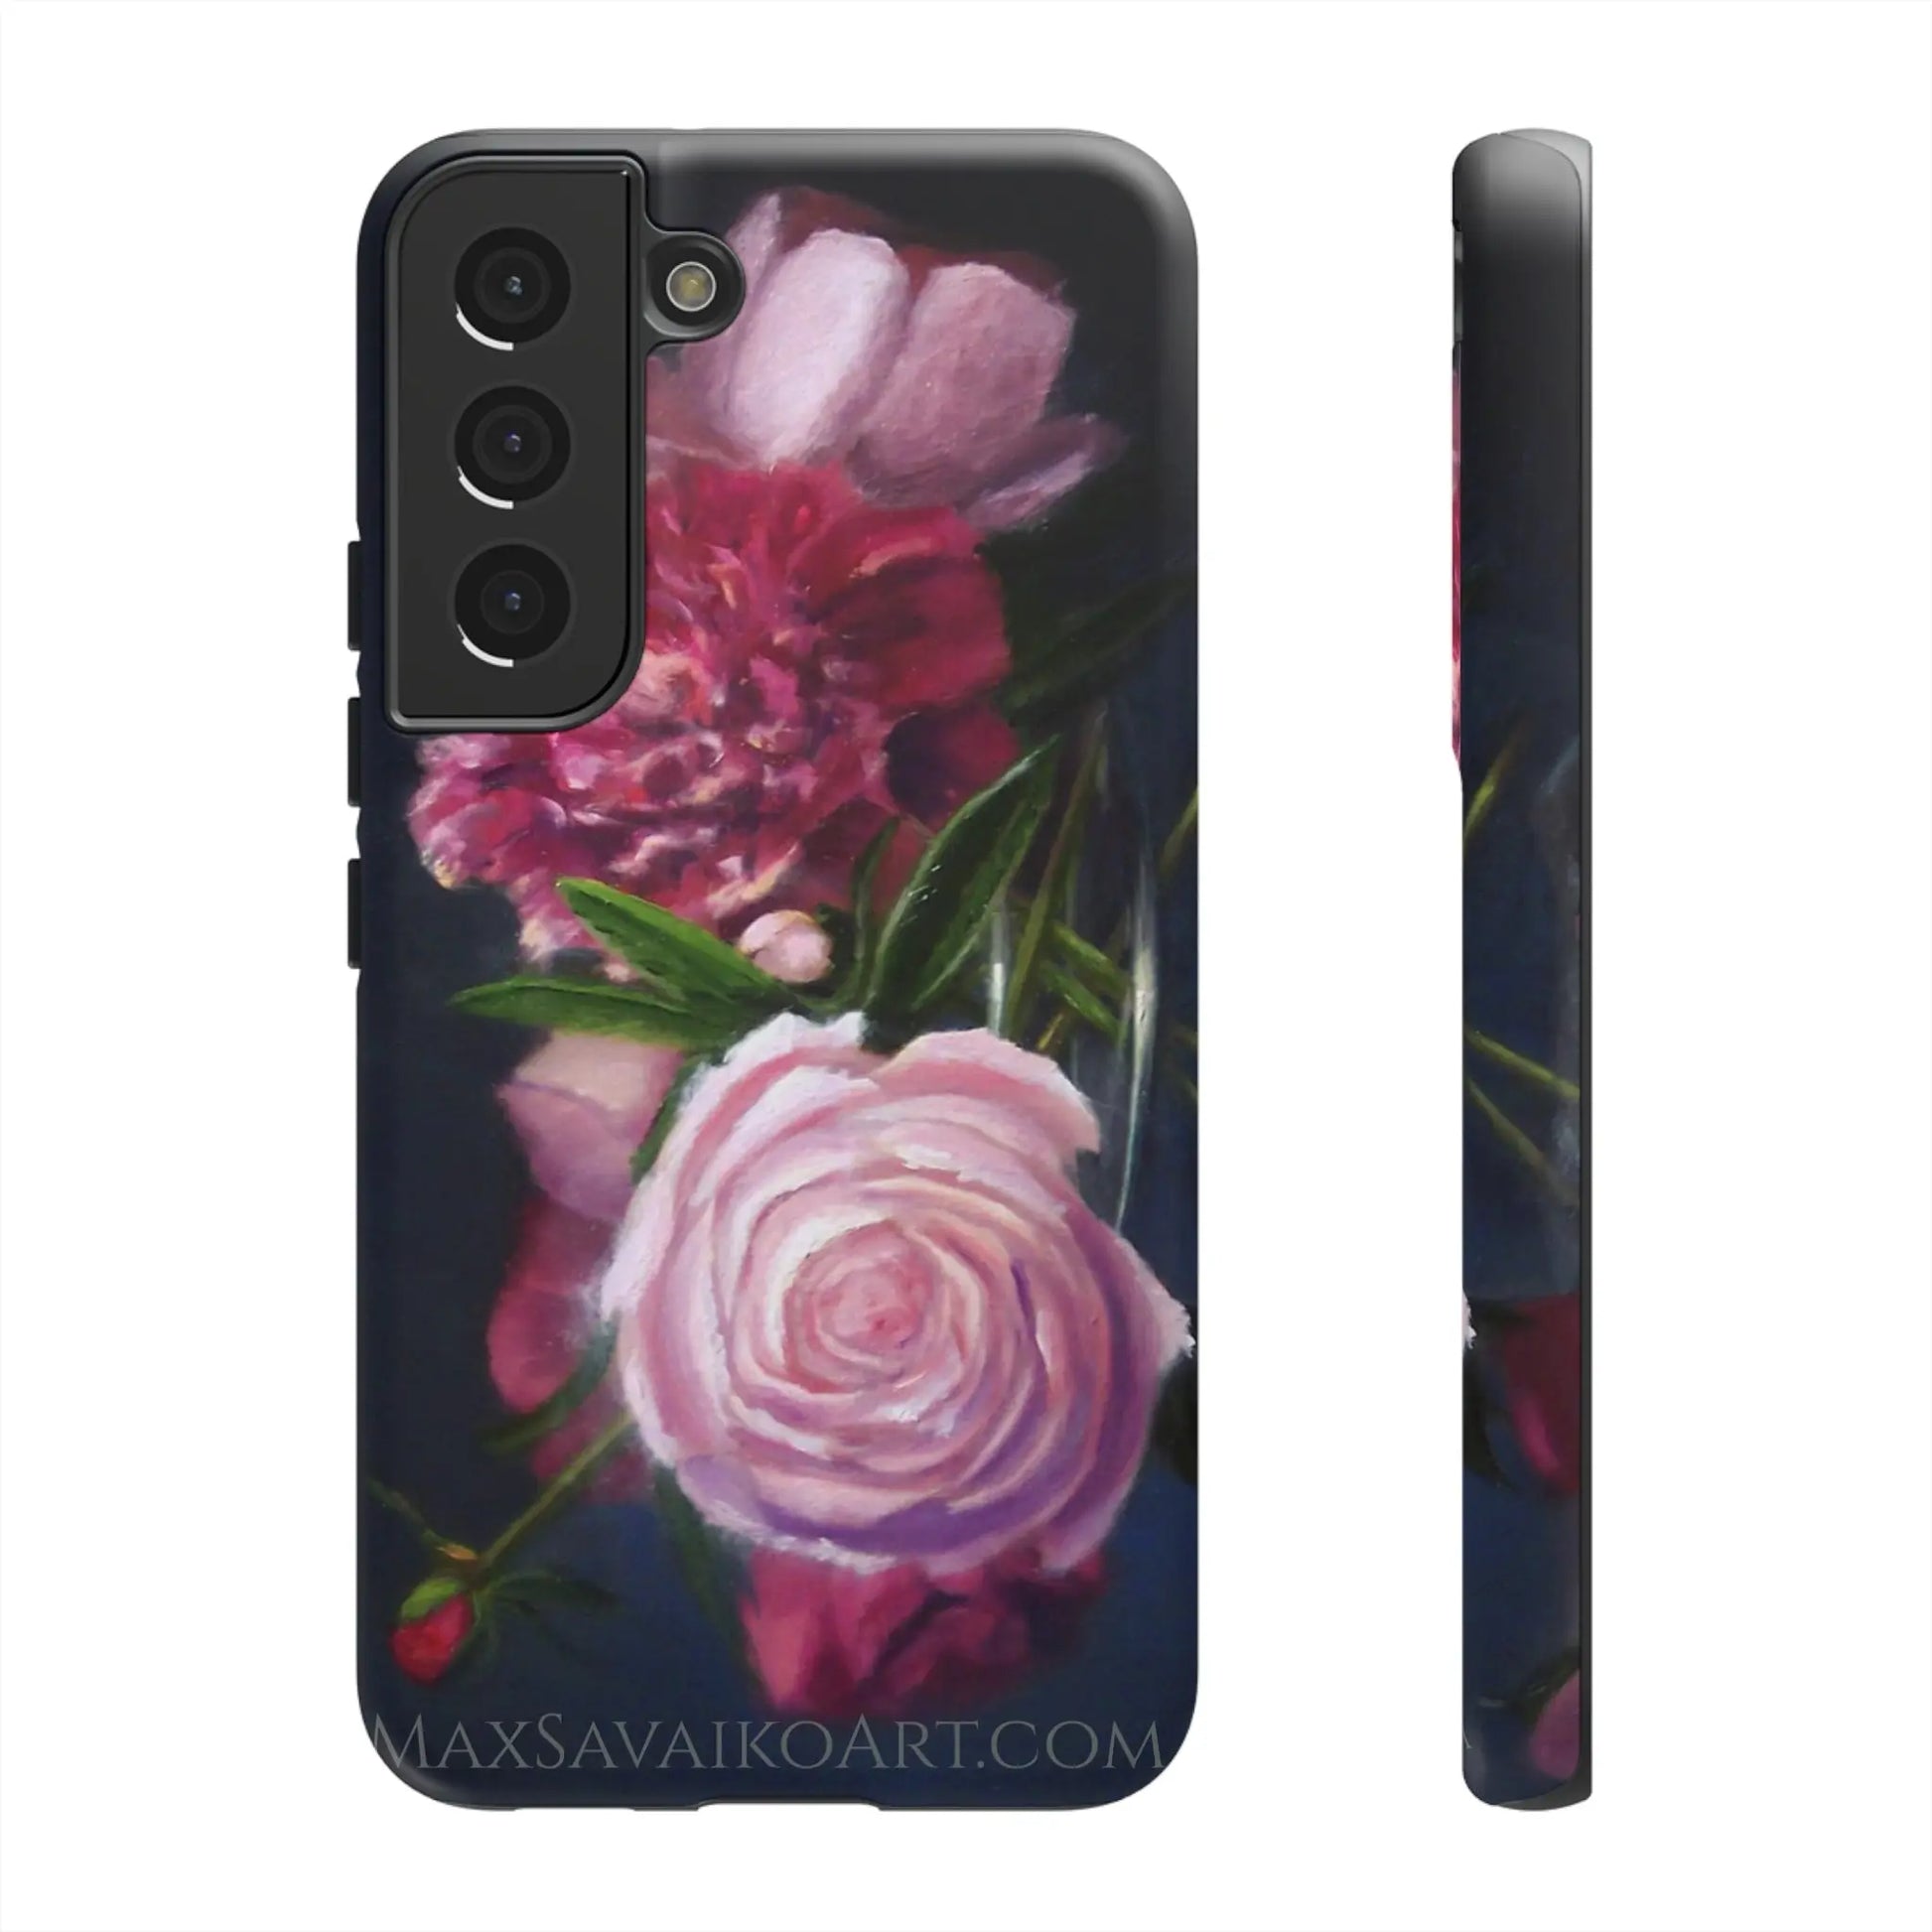 Savaiko Art - Ruby Peonies Tough Phone Case - Max Savaiko Art